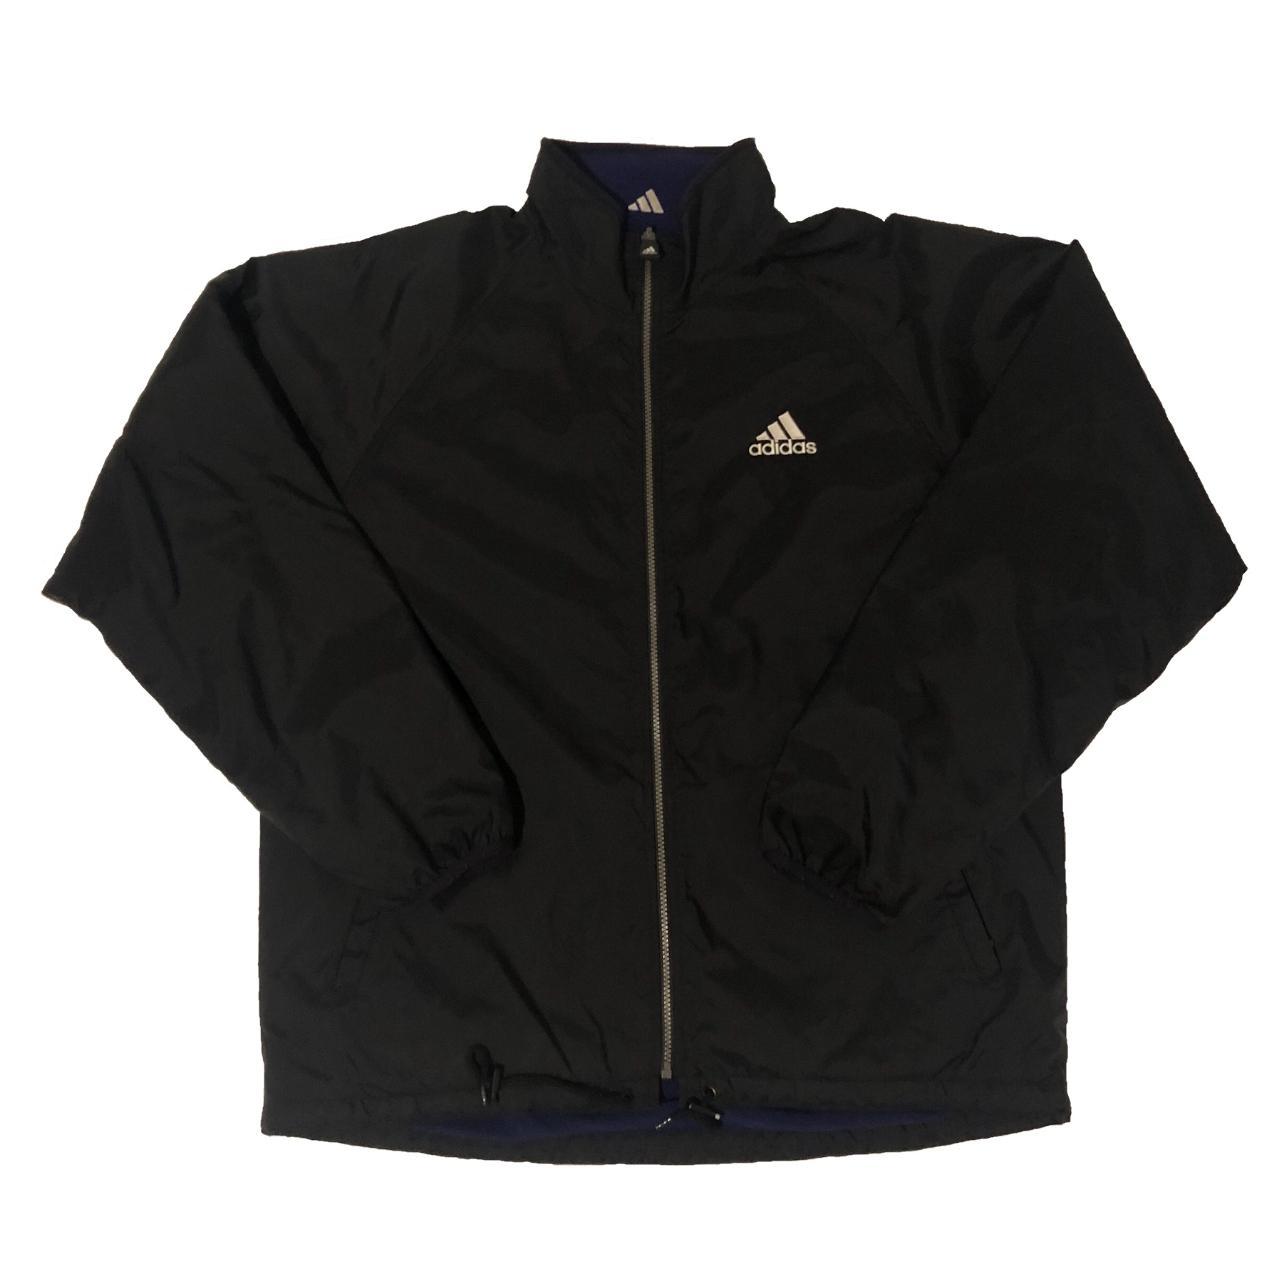 RARE Adidas Zip-Up Jacket Black/White Size... - Depop